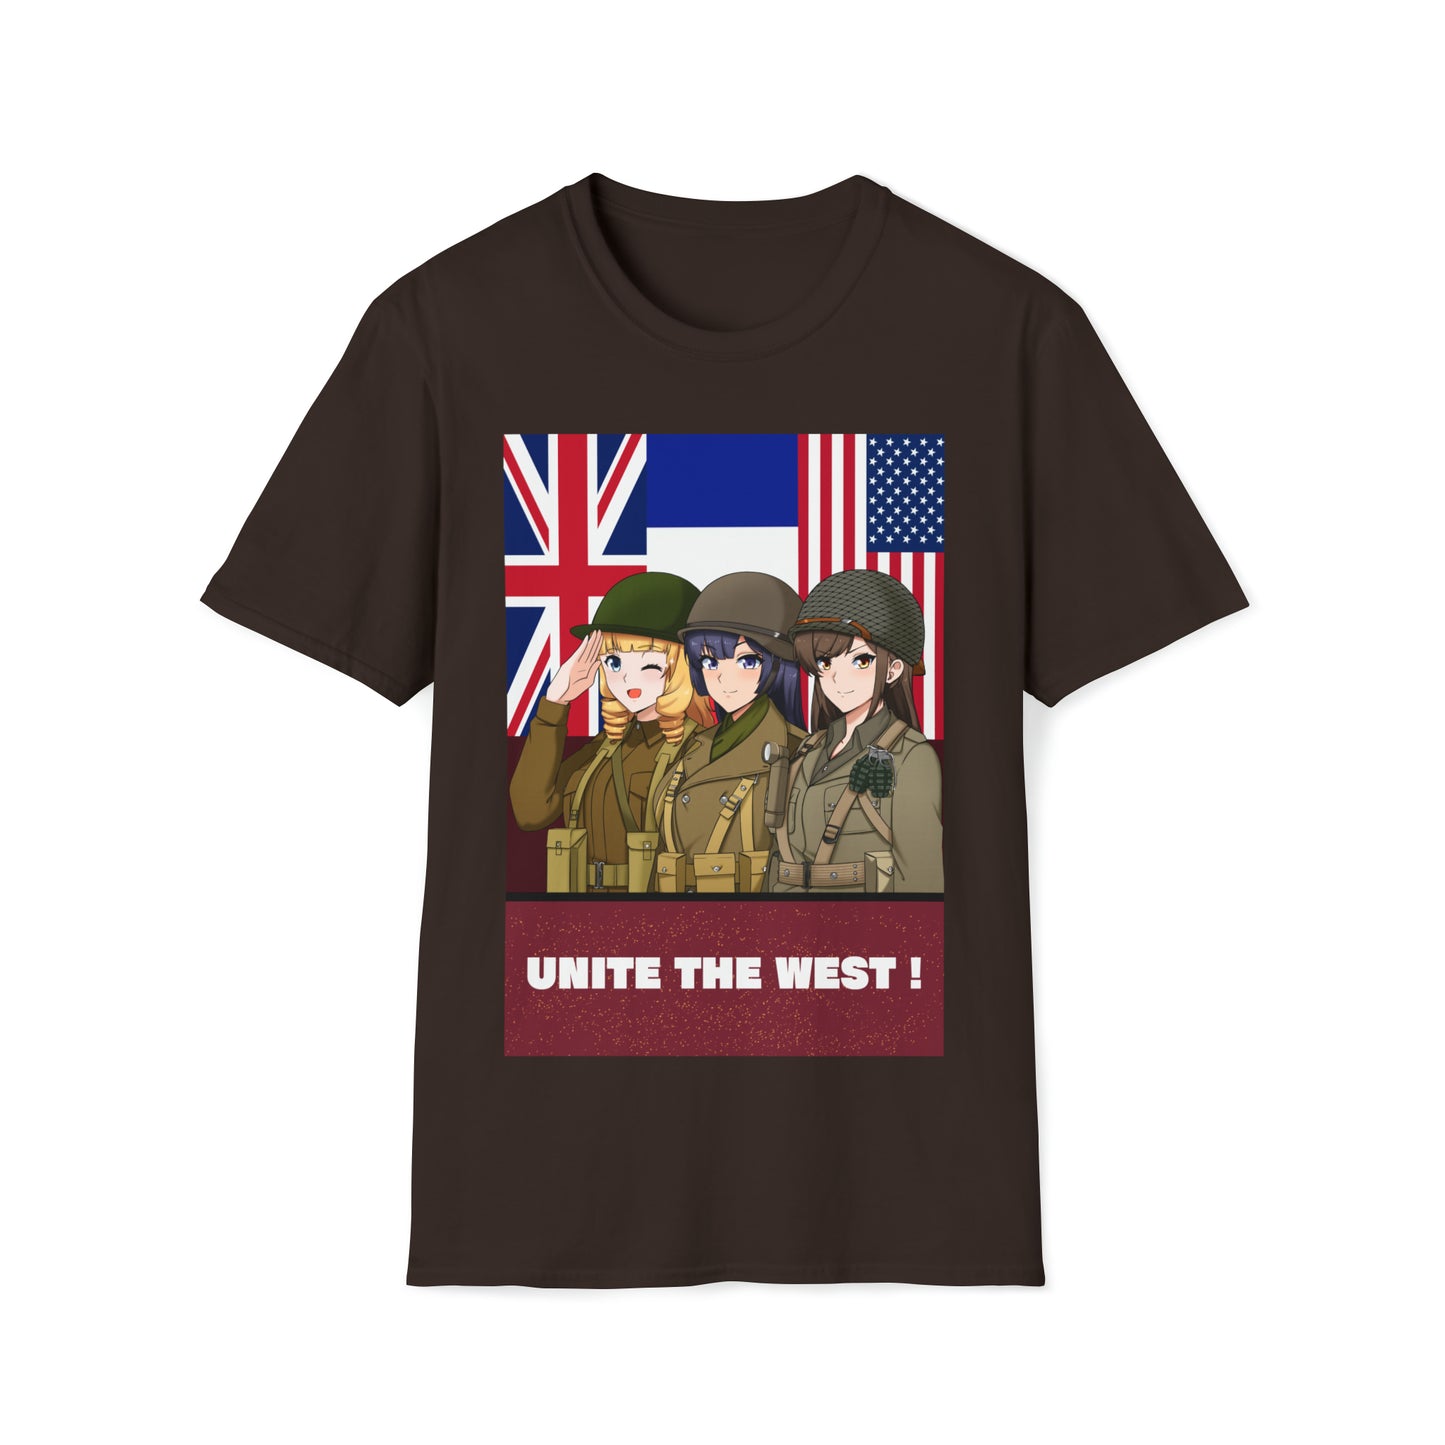 Unite the West Shirt